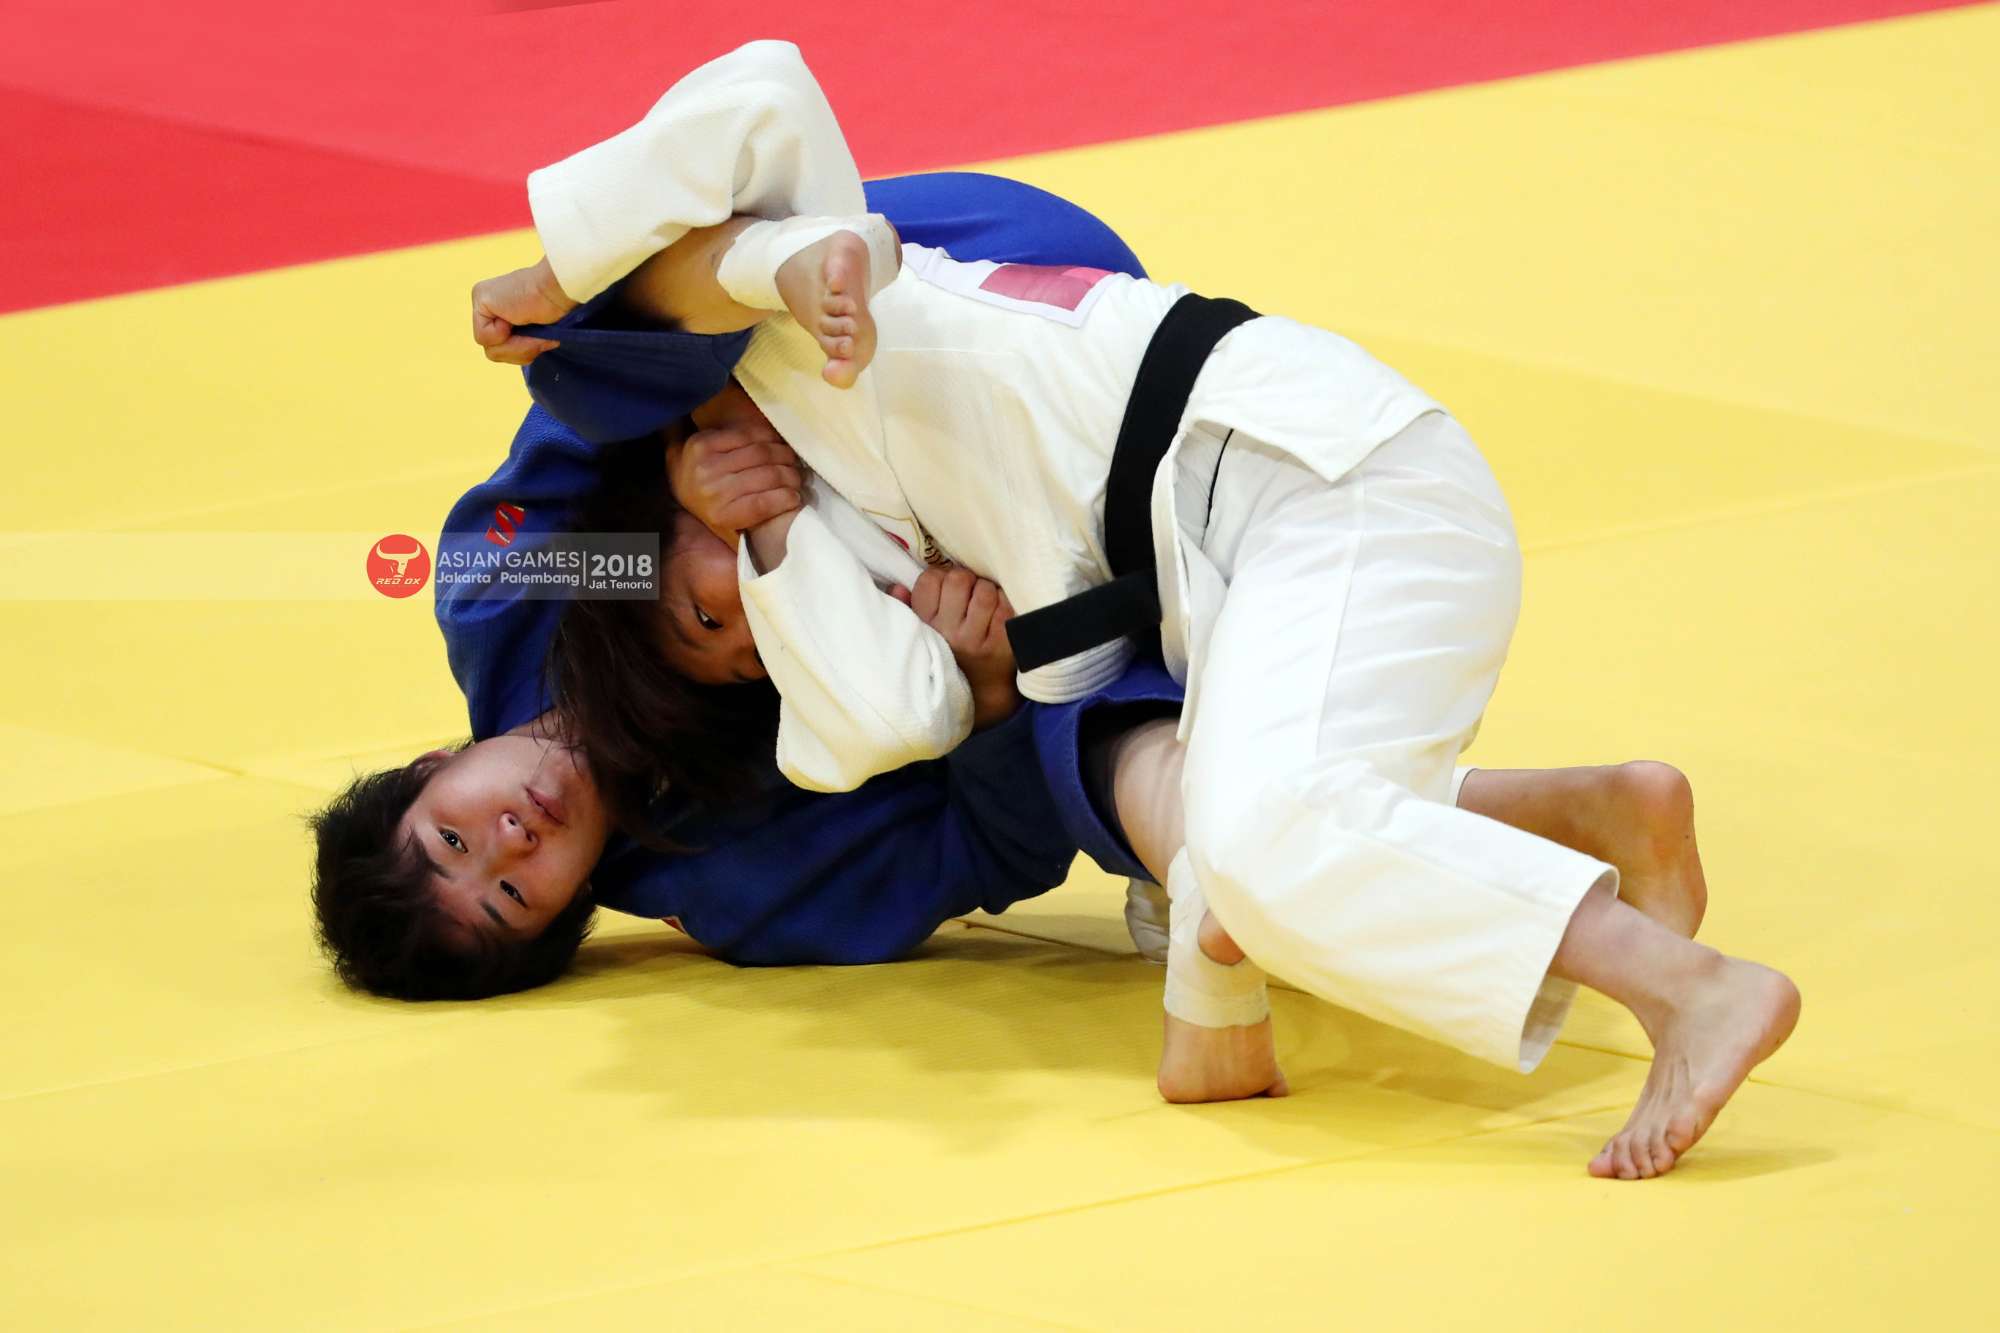 Asian Games 2018 Judo – Kiyomi Watanabe